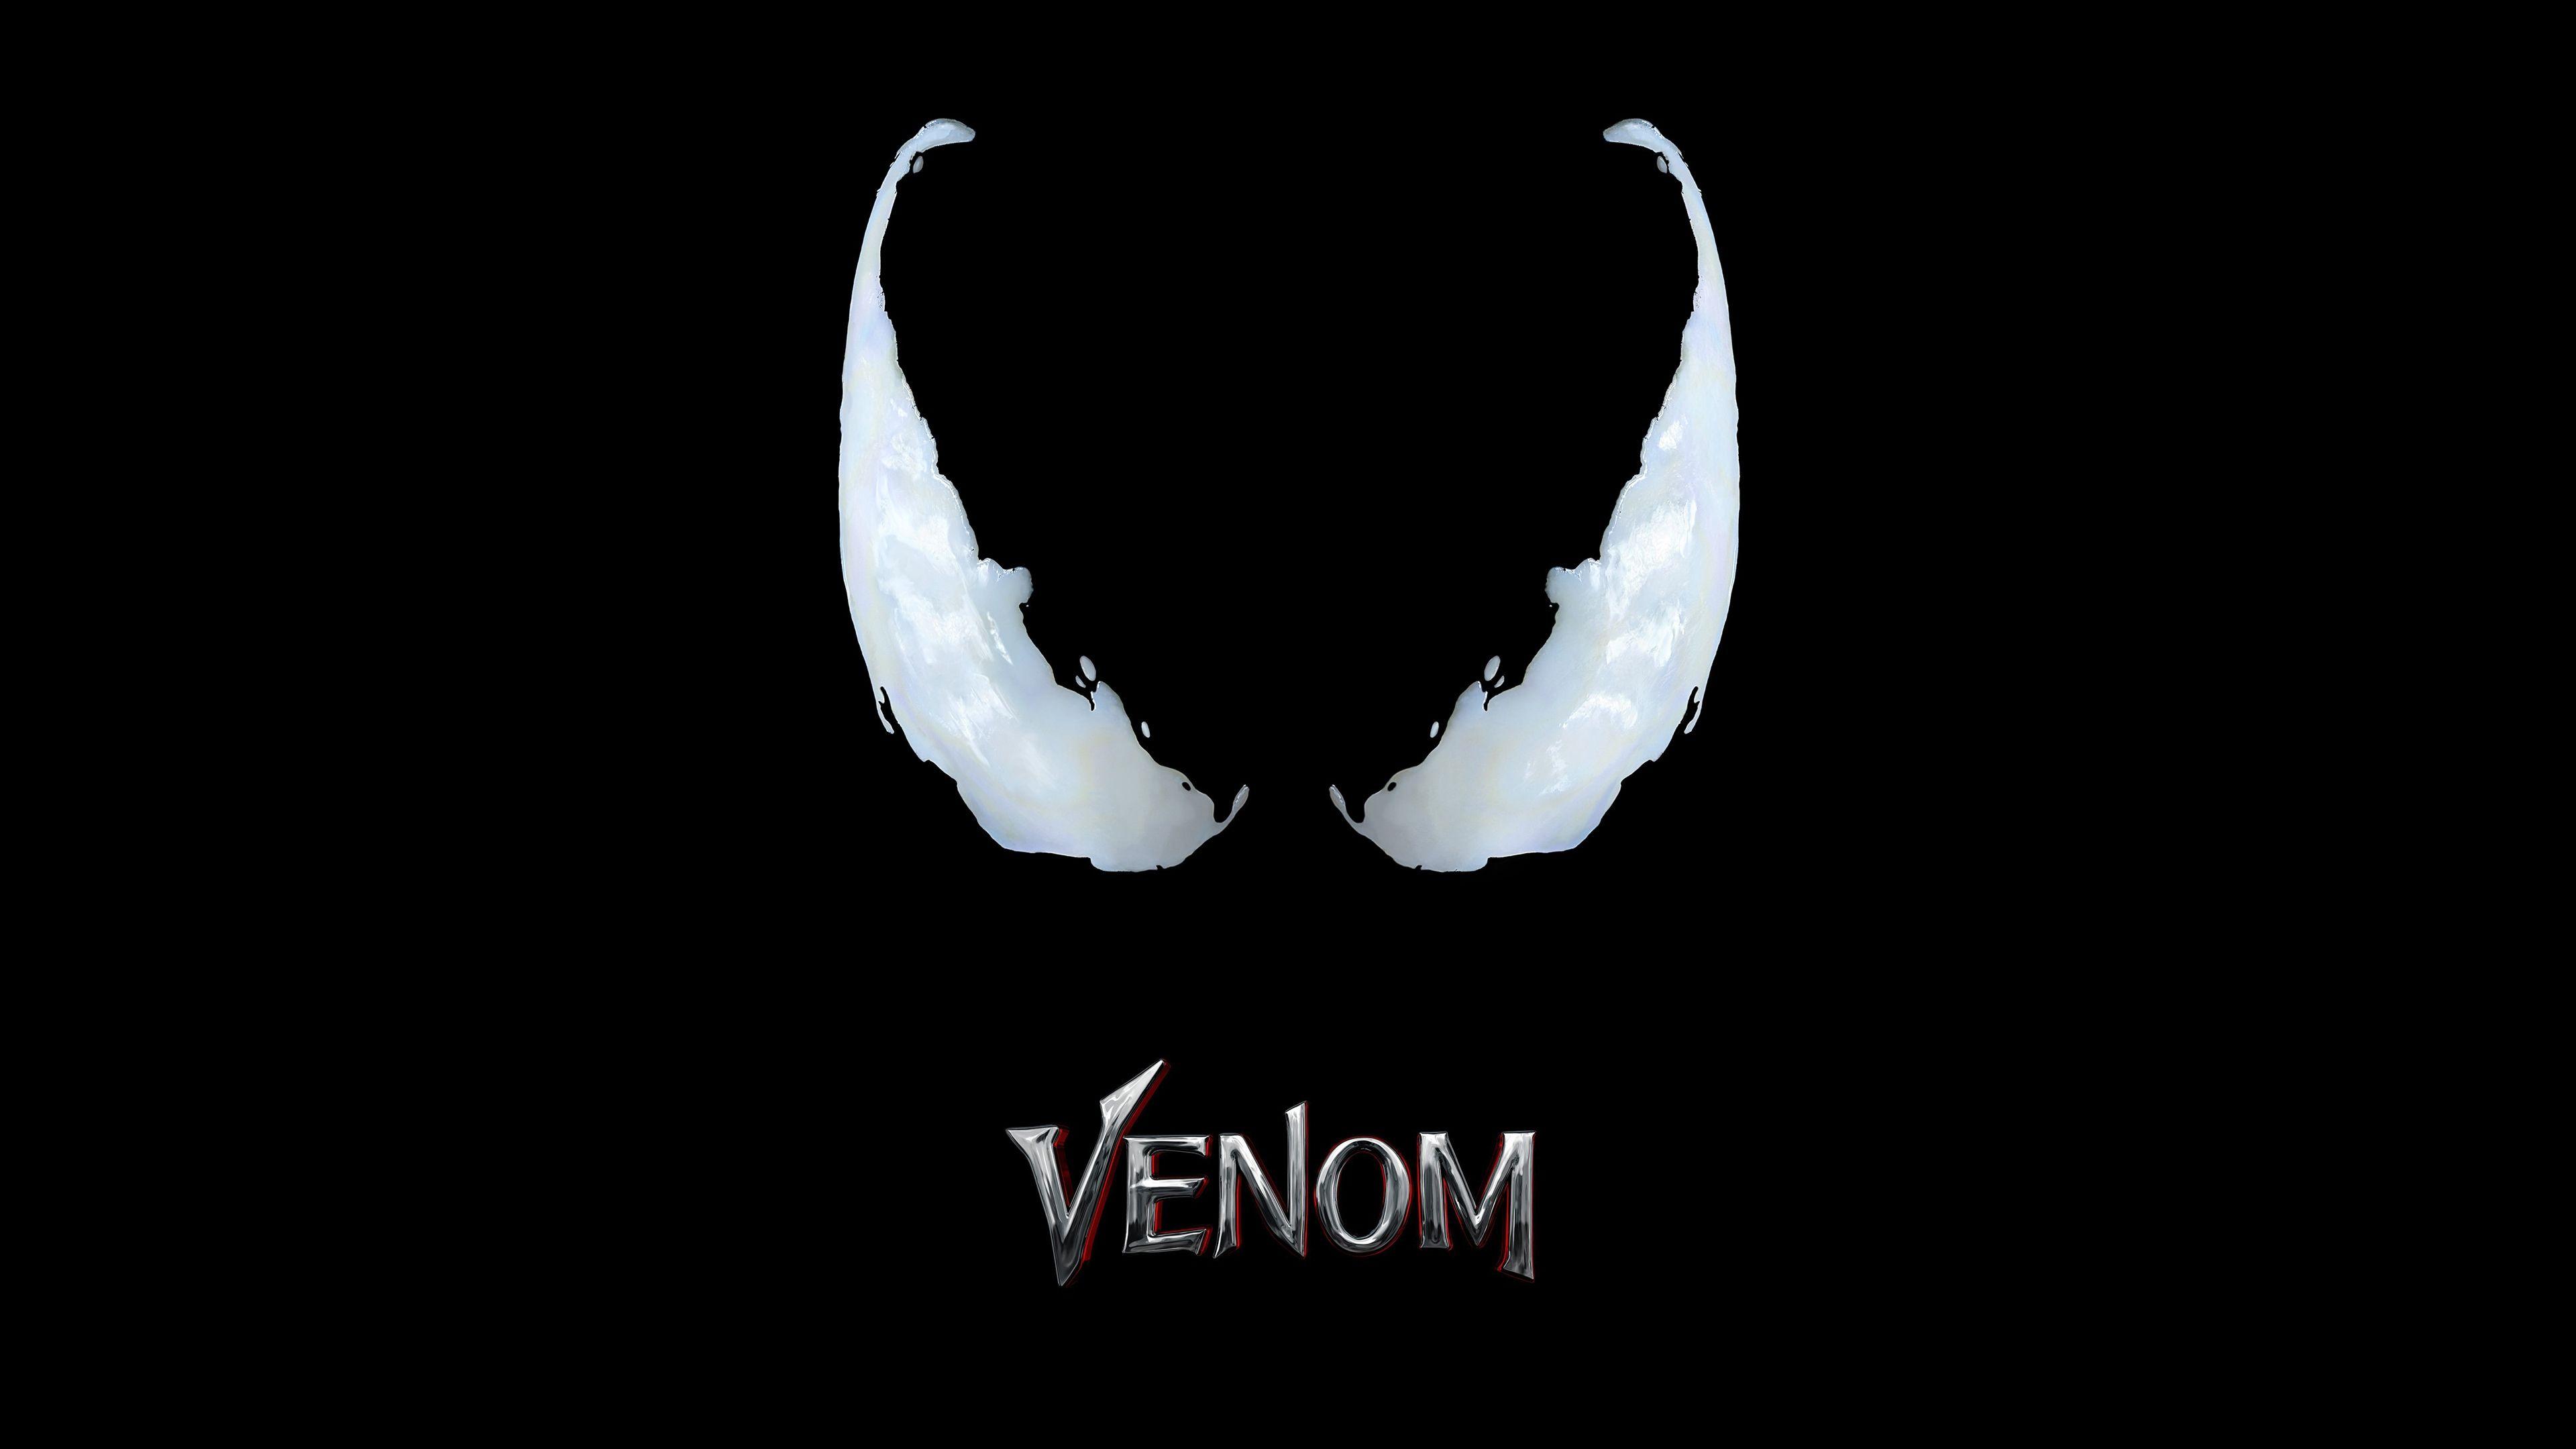 Venom Movie Logo 4k, HD Movies, 4k Wallpapers, Image, Backgrounds